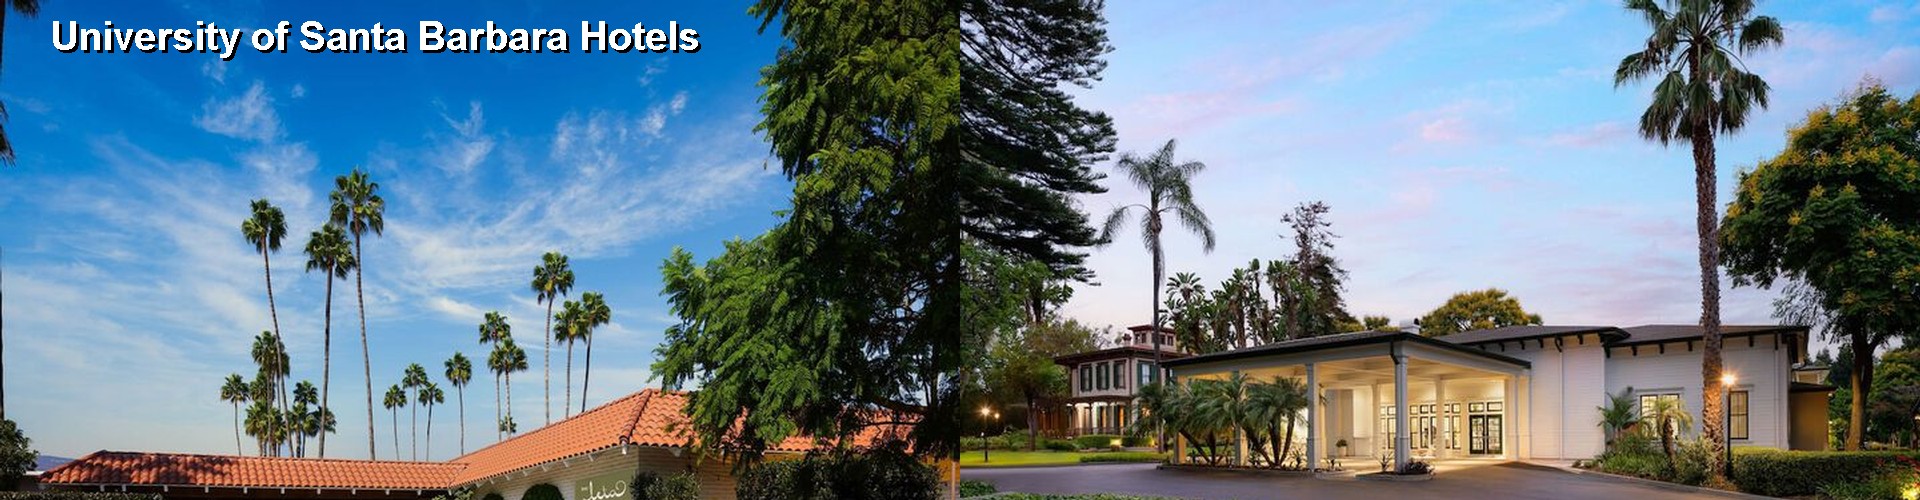 4 Best Hotels near University of Santa Barbara